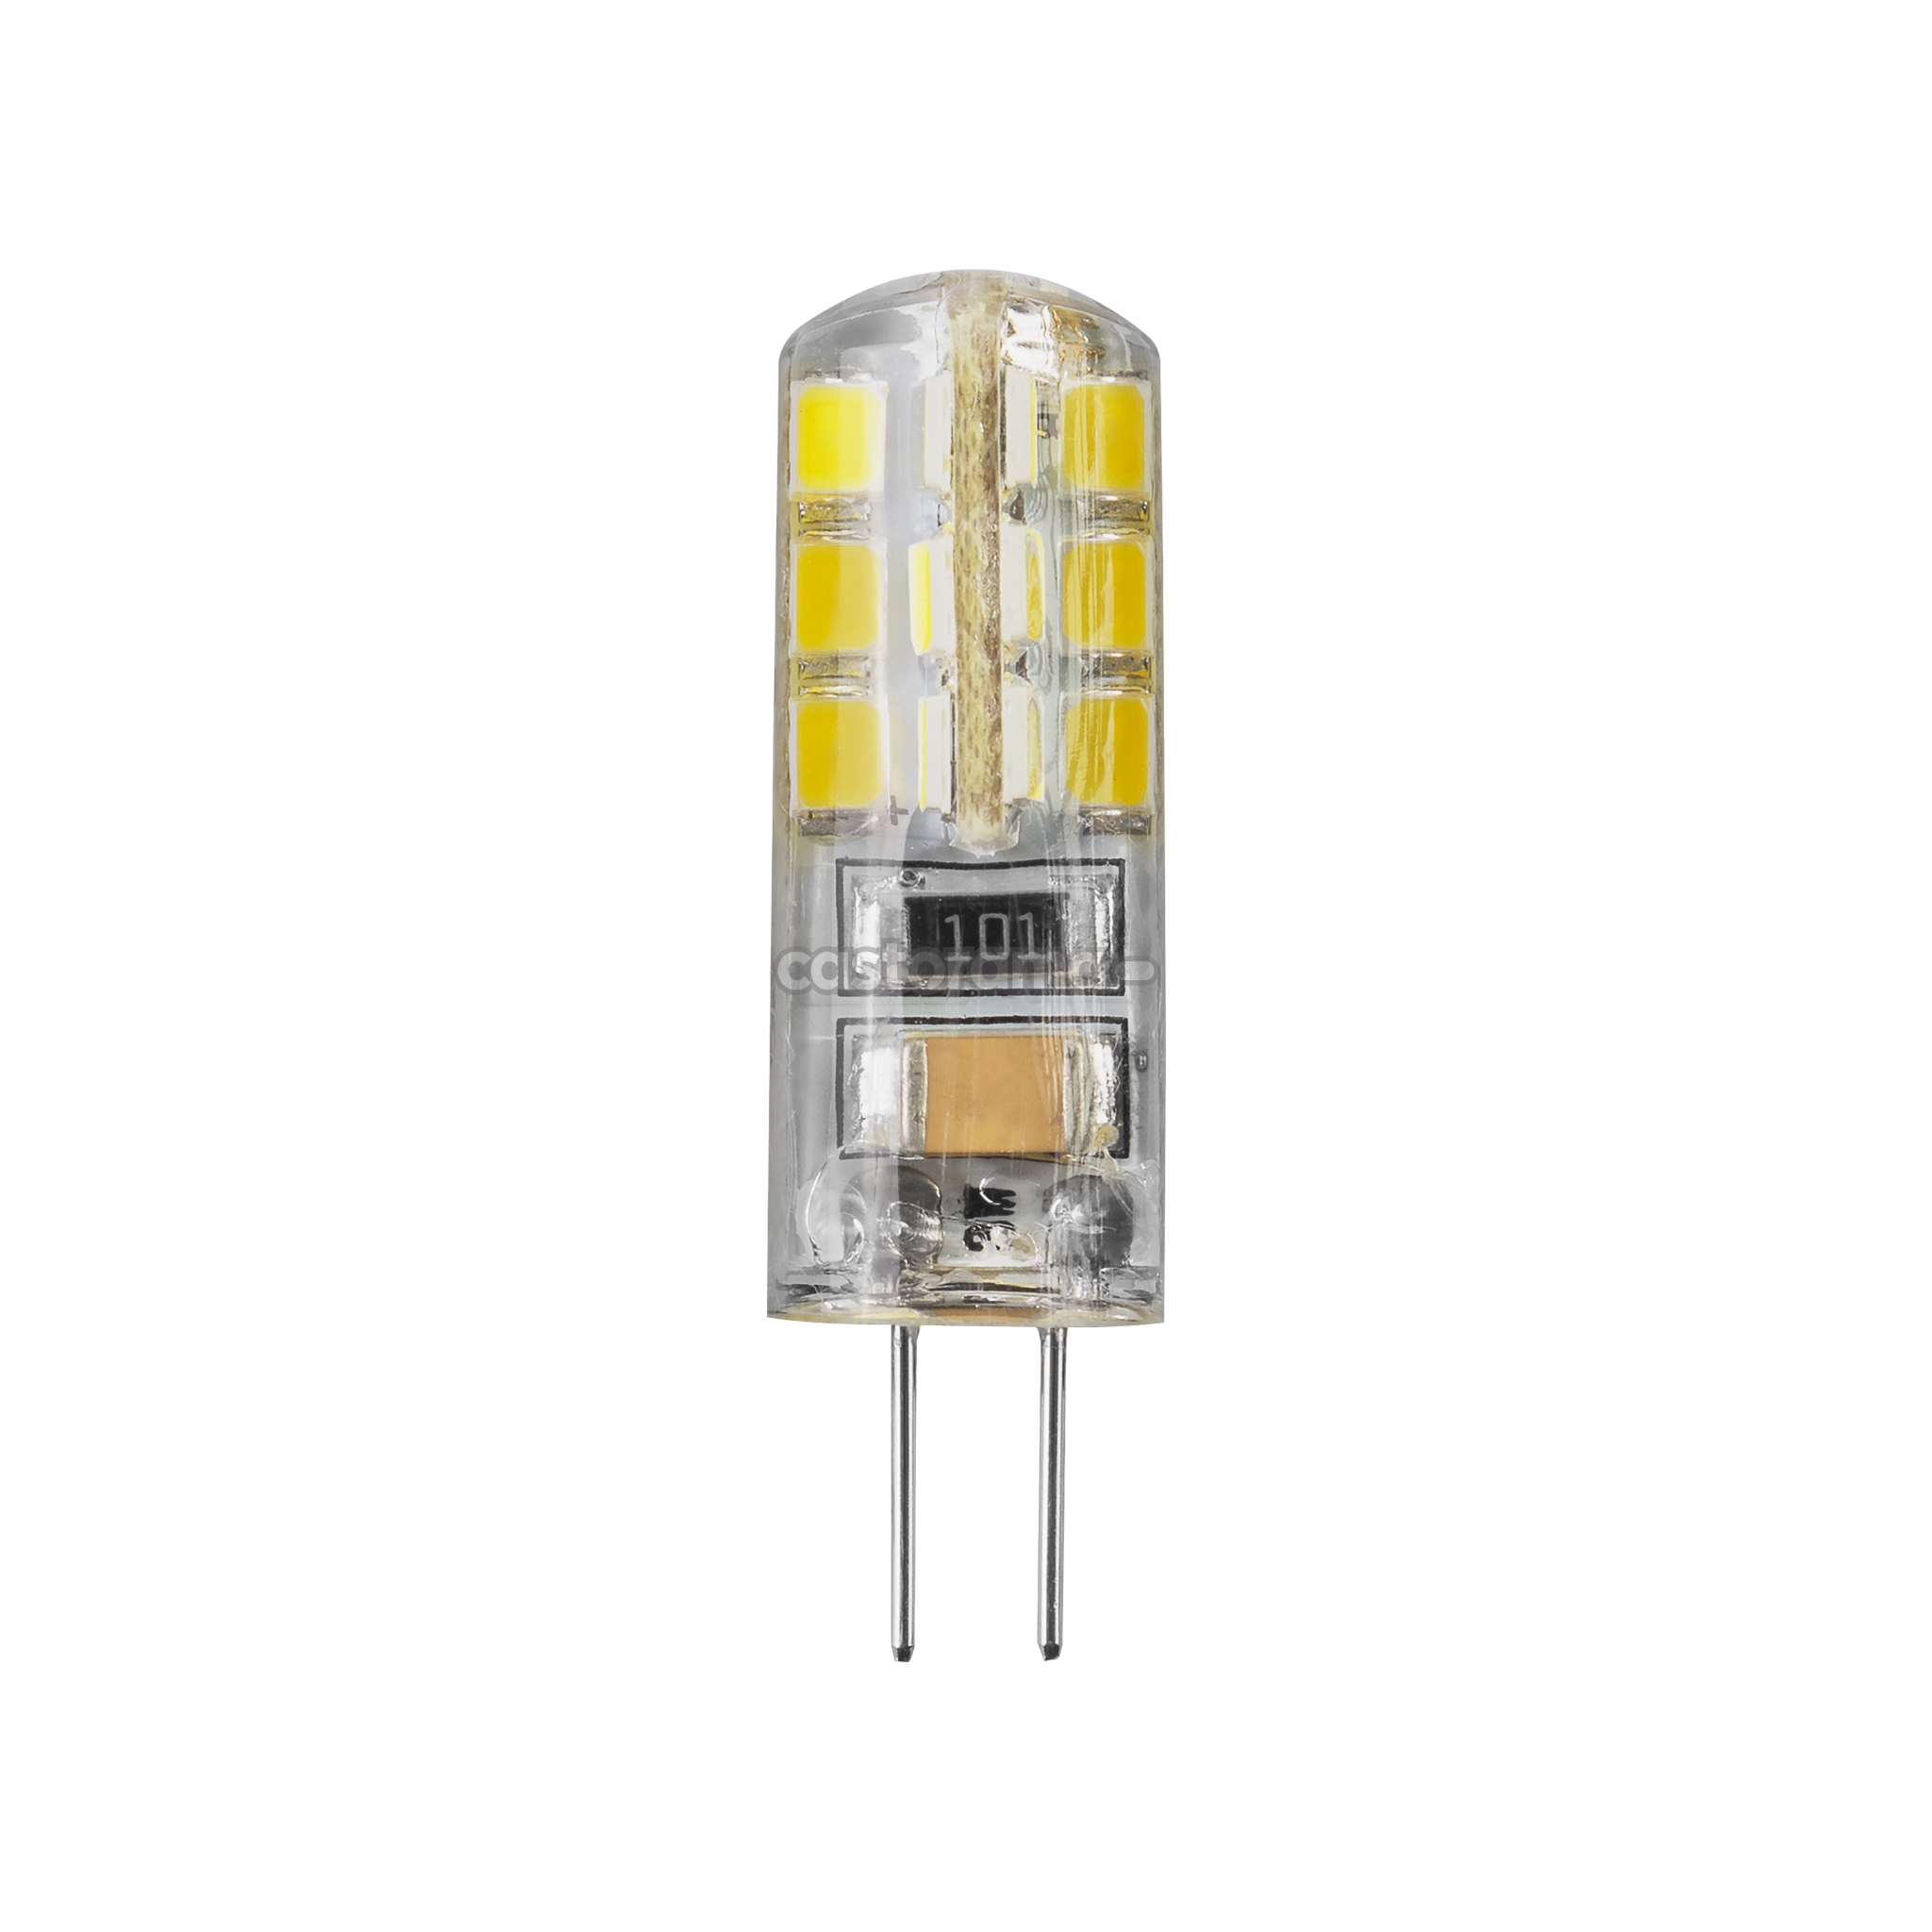 Светодиодная лампа led g4. G4 led 5w 220v 4200k. Лампа led-g4 5w 220v 4200k. Лампа светодиодная Navigator g4. Лампа светодиодная Ecola g4rv15elc, g4, Corn, 1.5Вт.